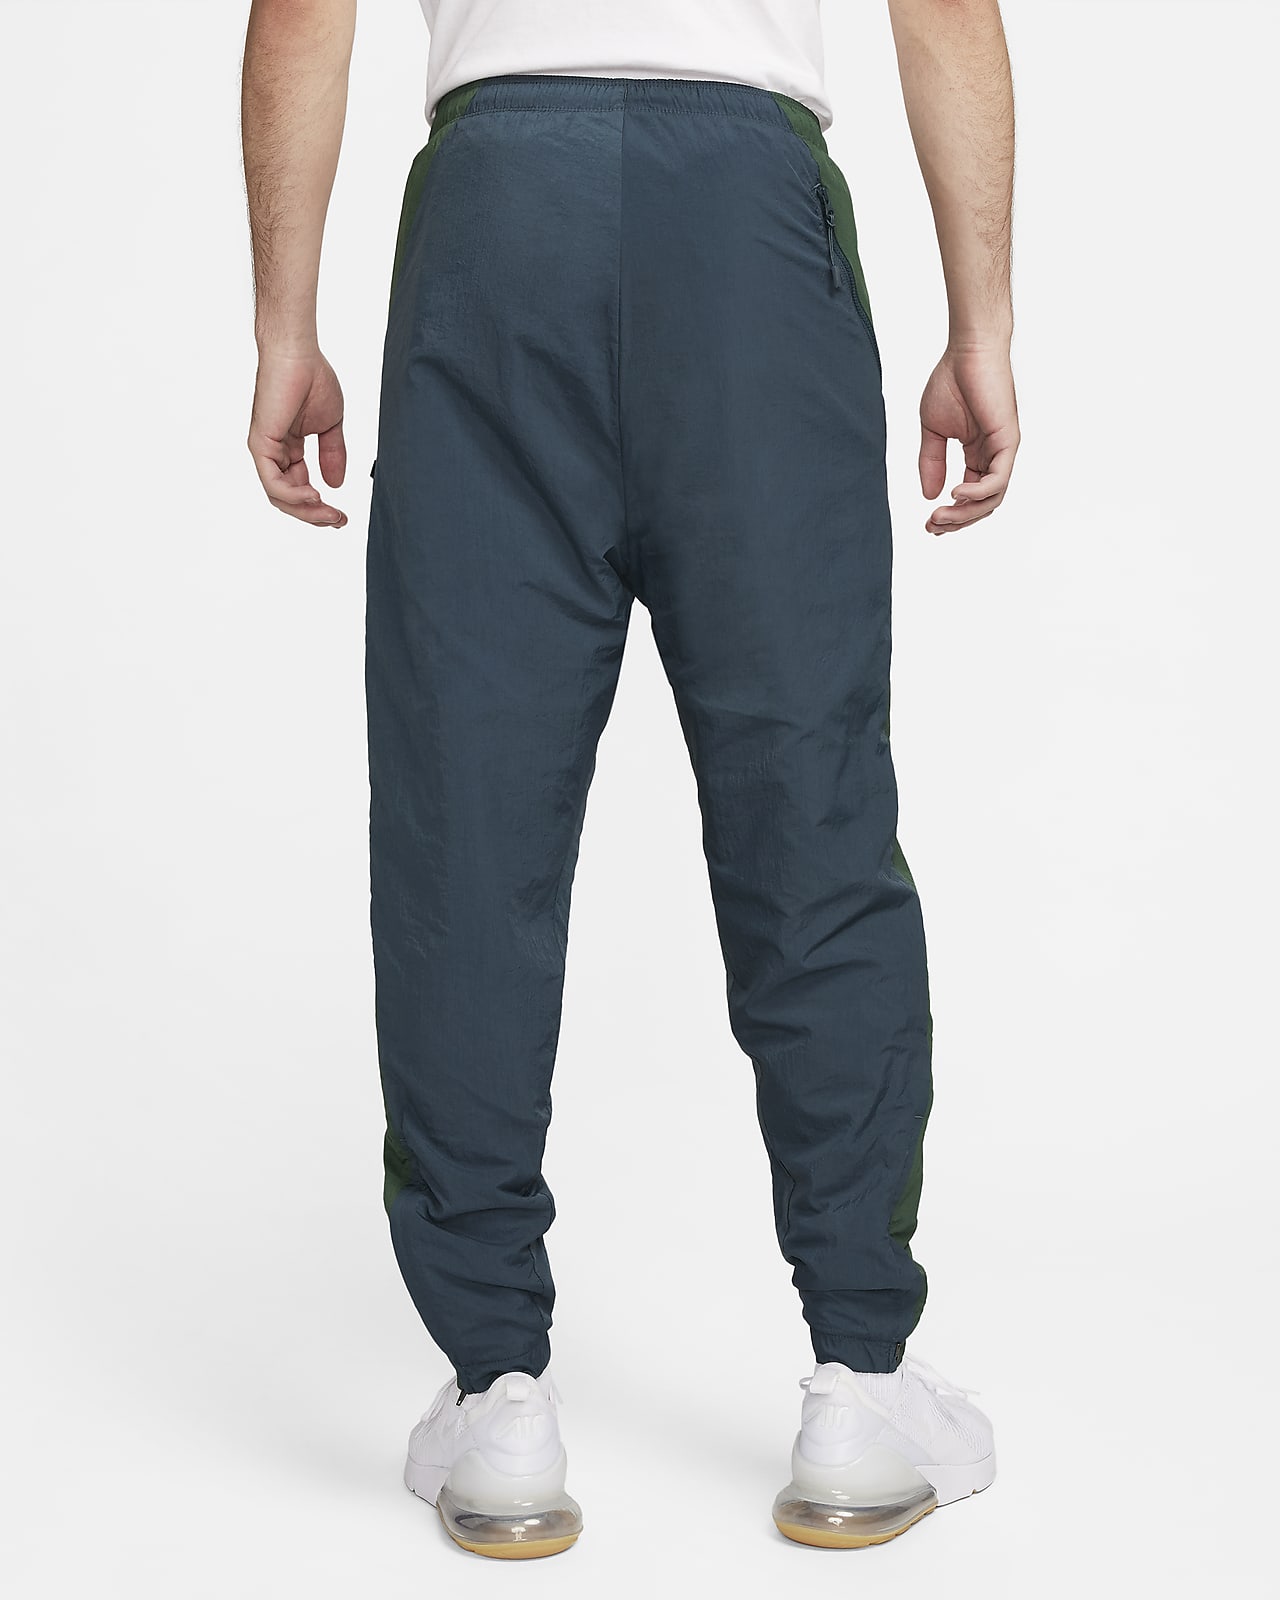 NikeLab's Fleece Sweatpants Arrive in New Seasonal Colors